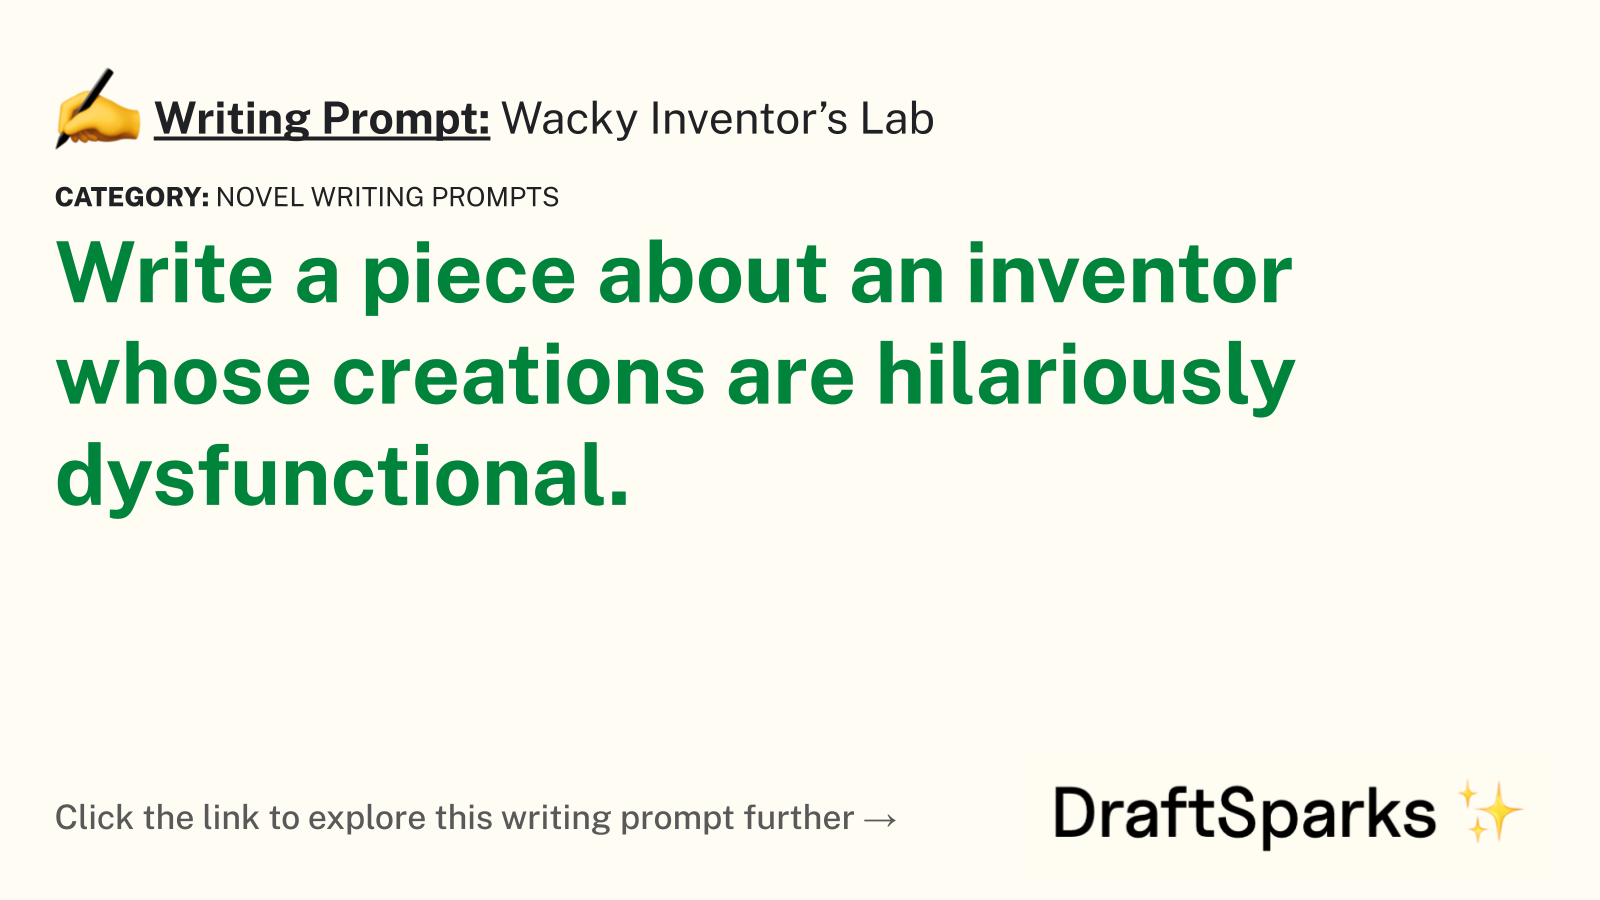 Wacky Inventor’s Lab